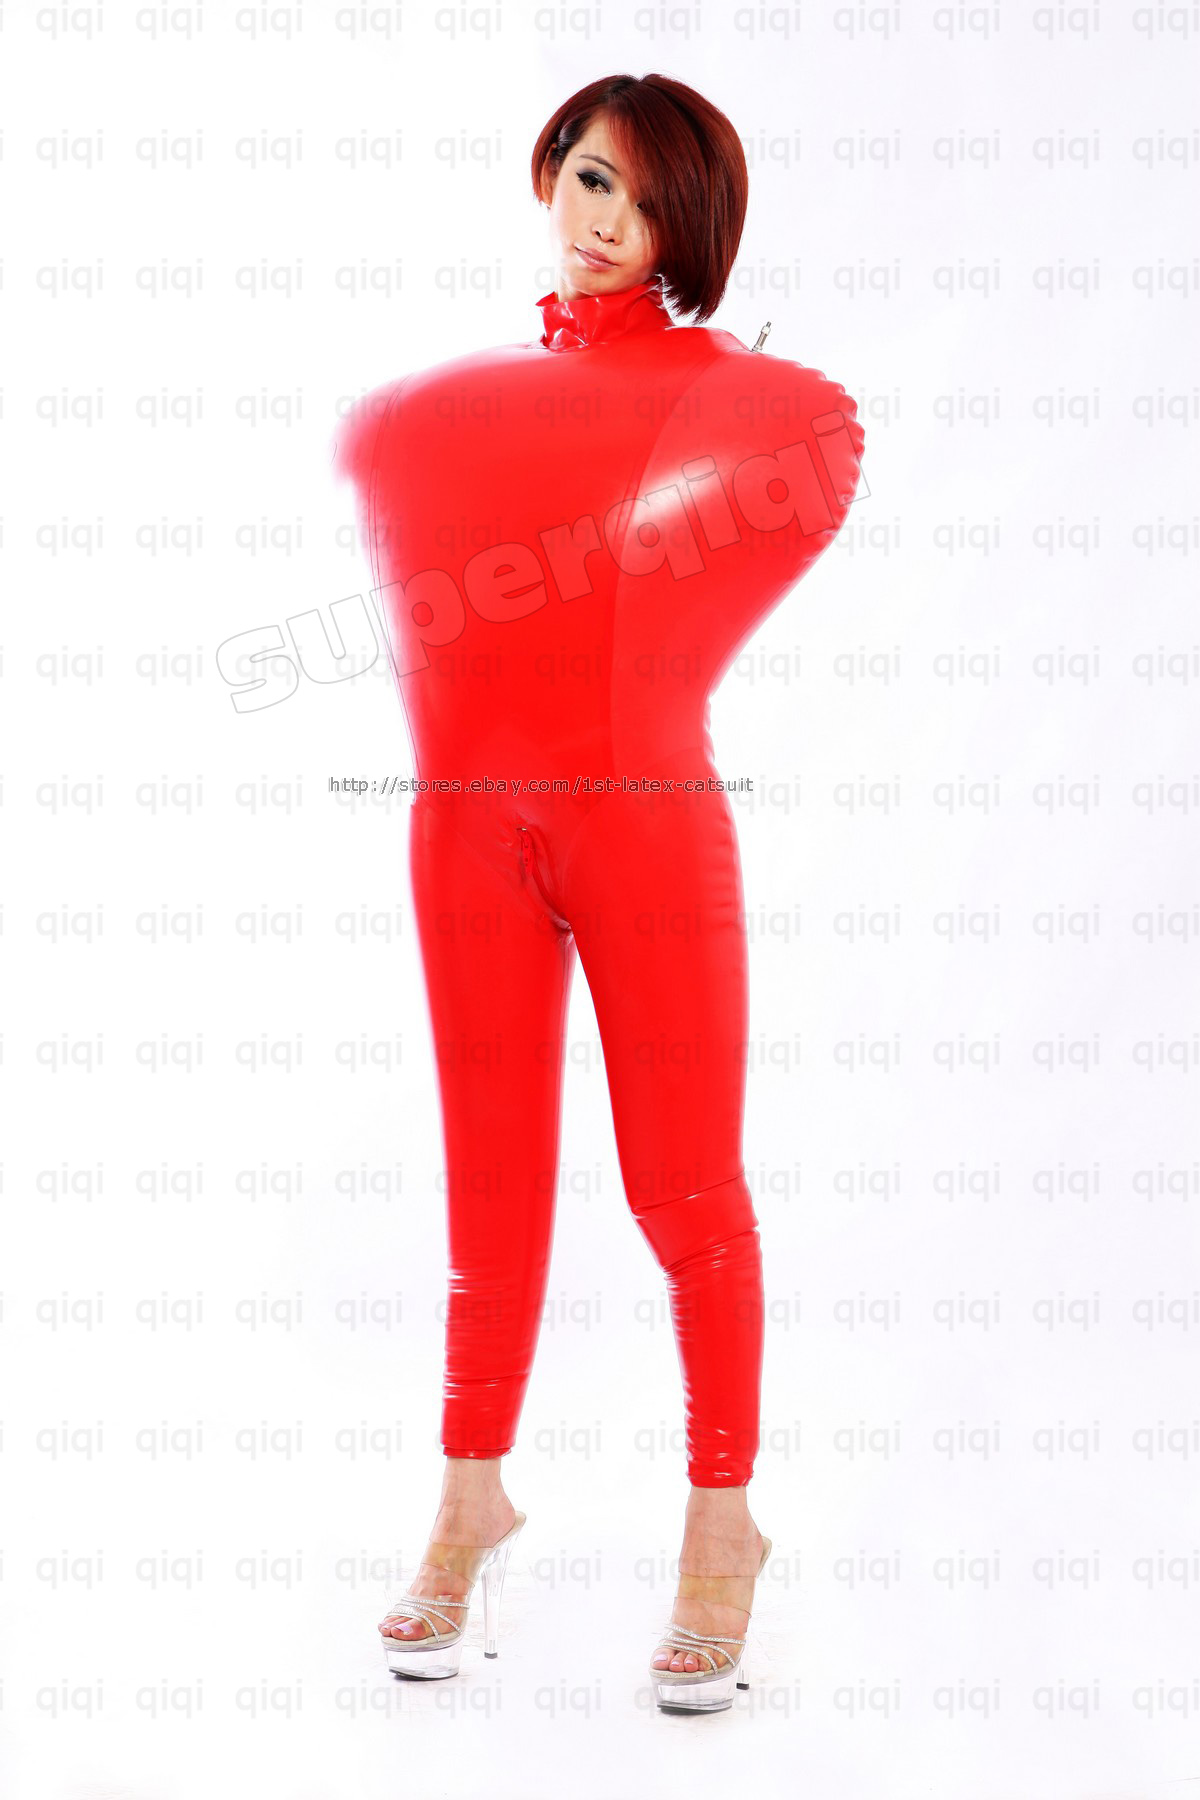 Latex Rubber Gummi 45mm Inflatable Binder Catsuit Suit Unique Clothing Bodysuit Ebay